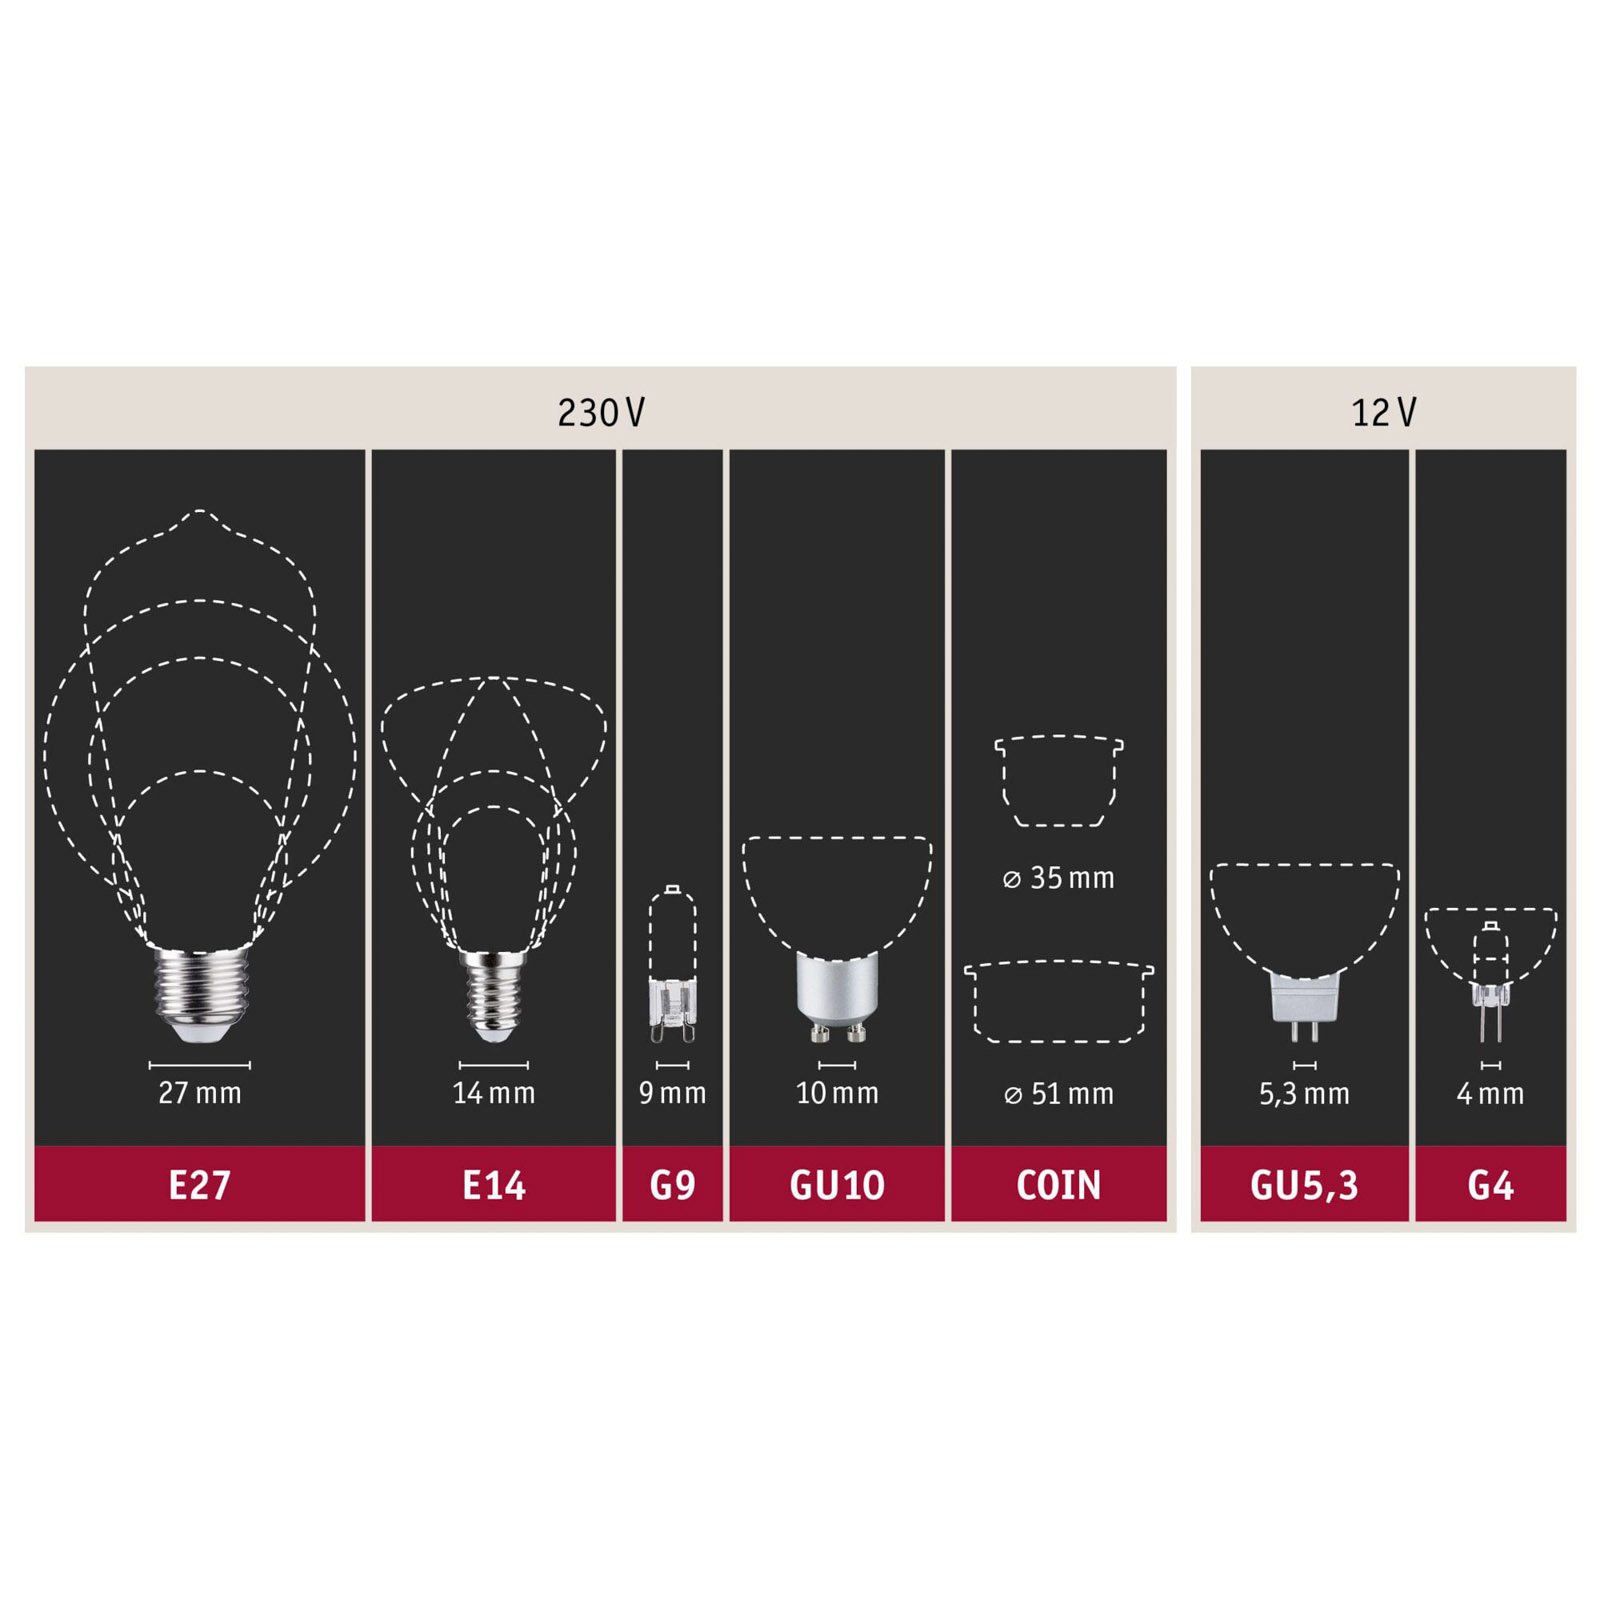 LED bulb E27 5W drop 2,700K clear